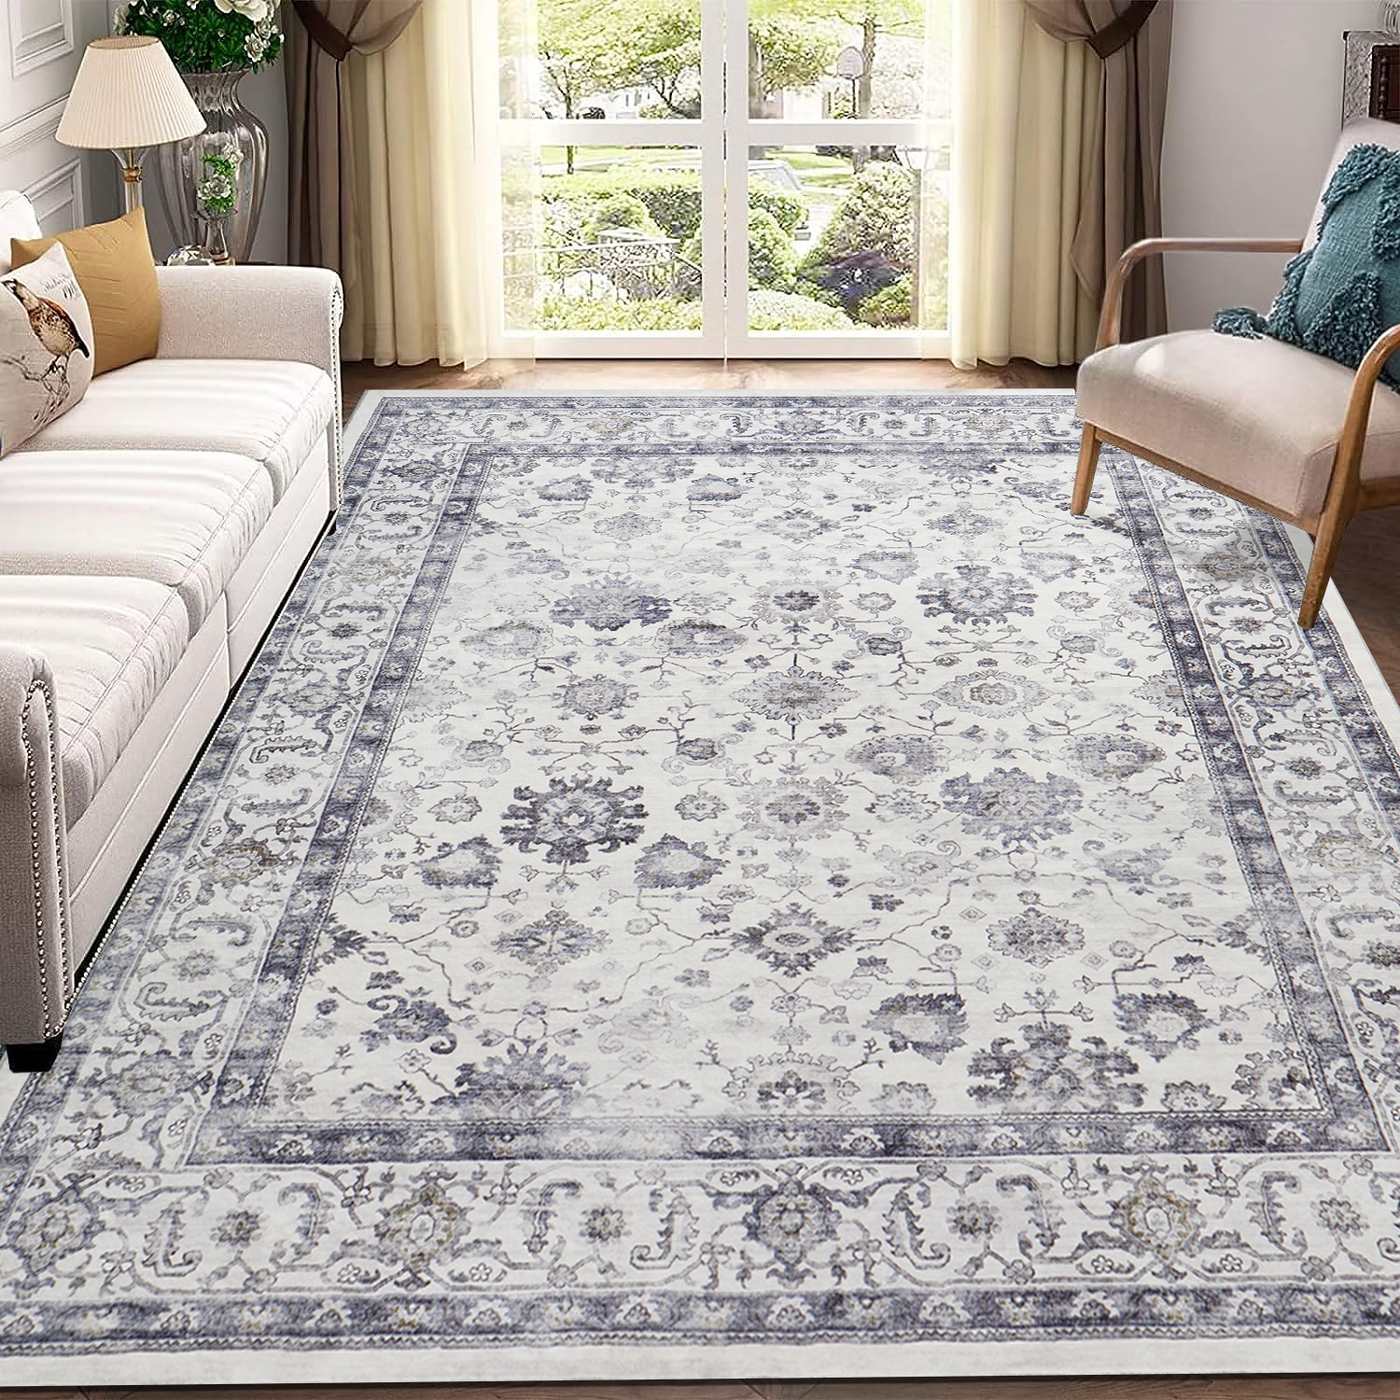 Oriental Living Room Carpet Serene Rug